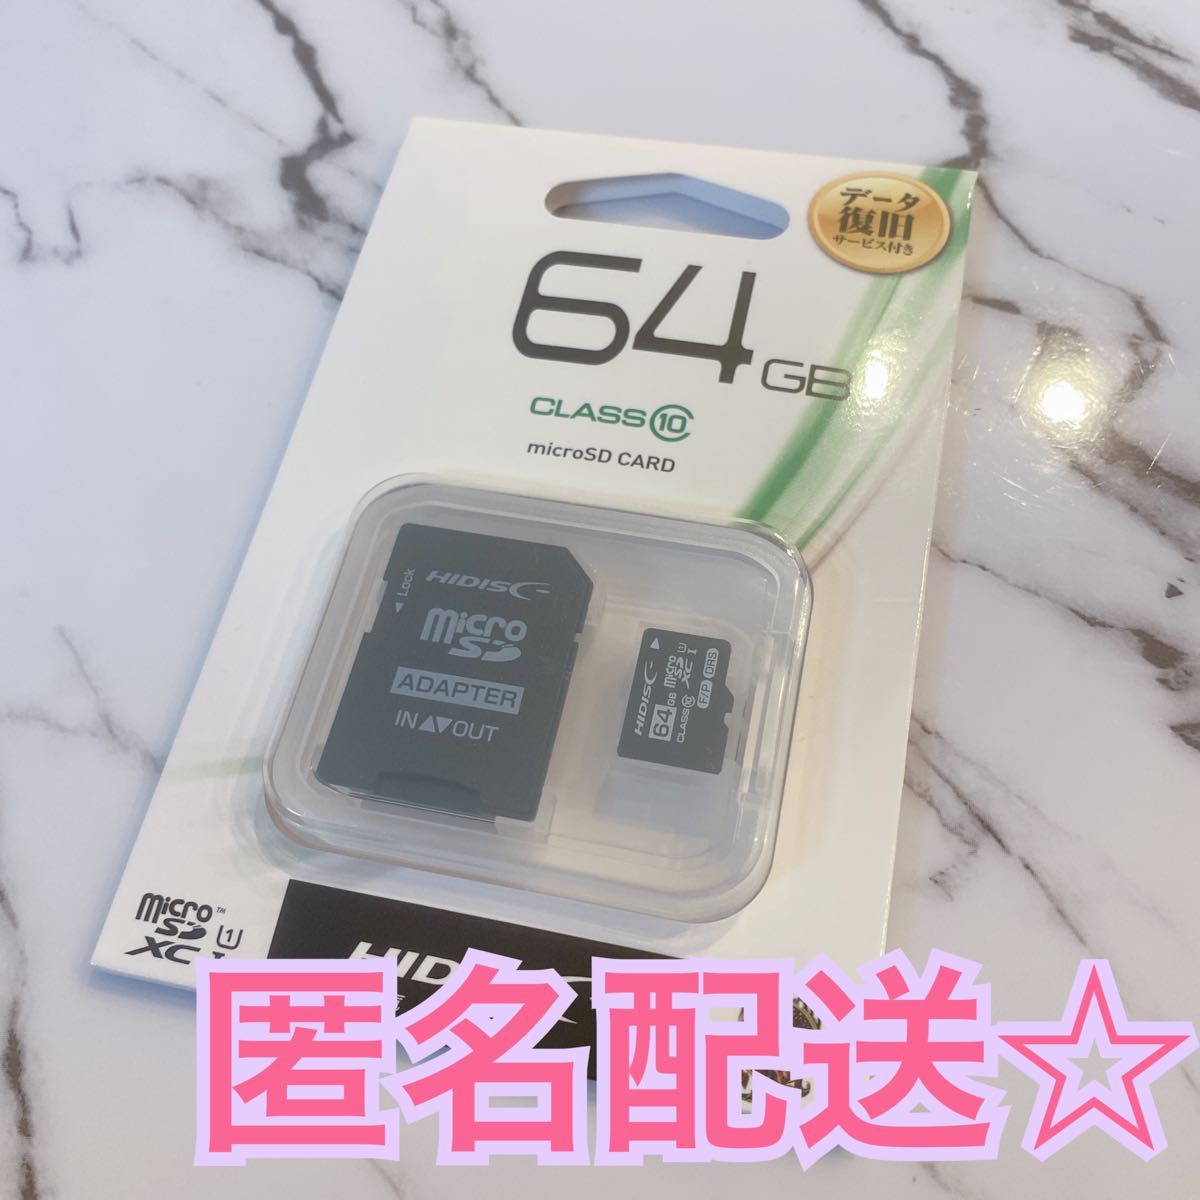 64GB  microSD CARD SDアダプタ付 磁気研究所 ハイディスク